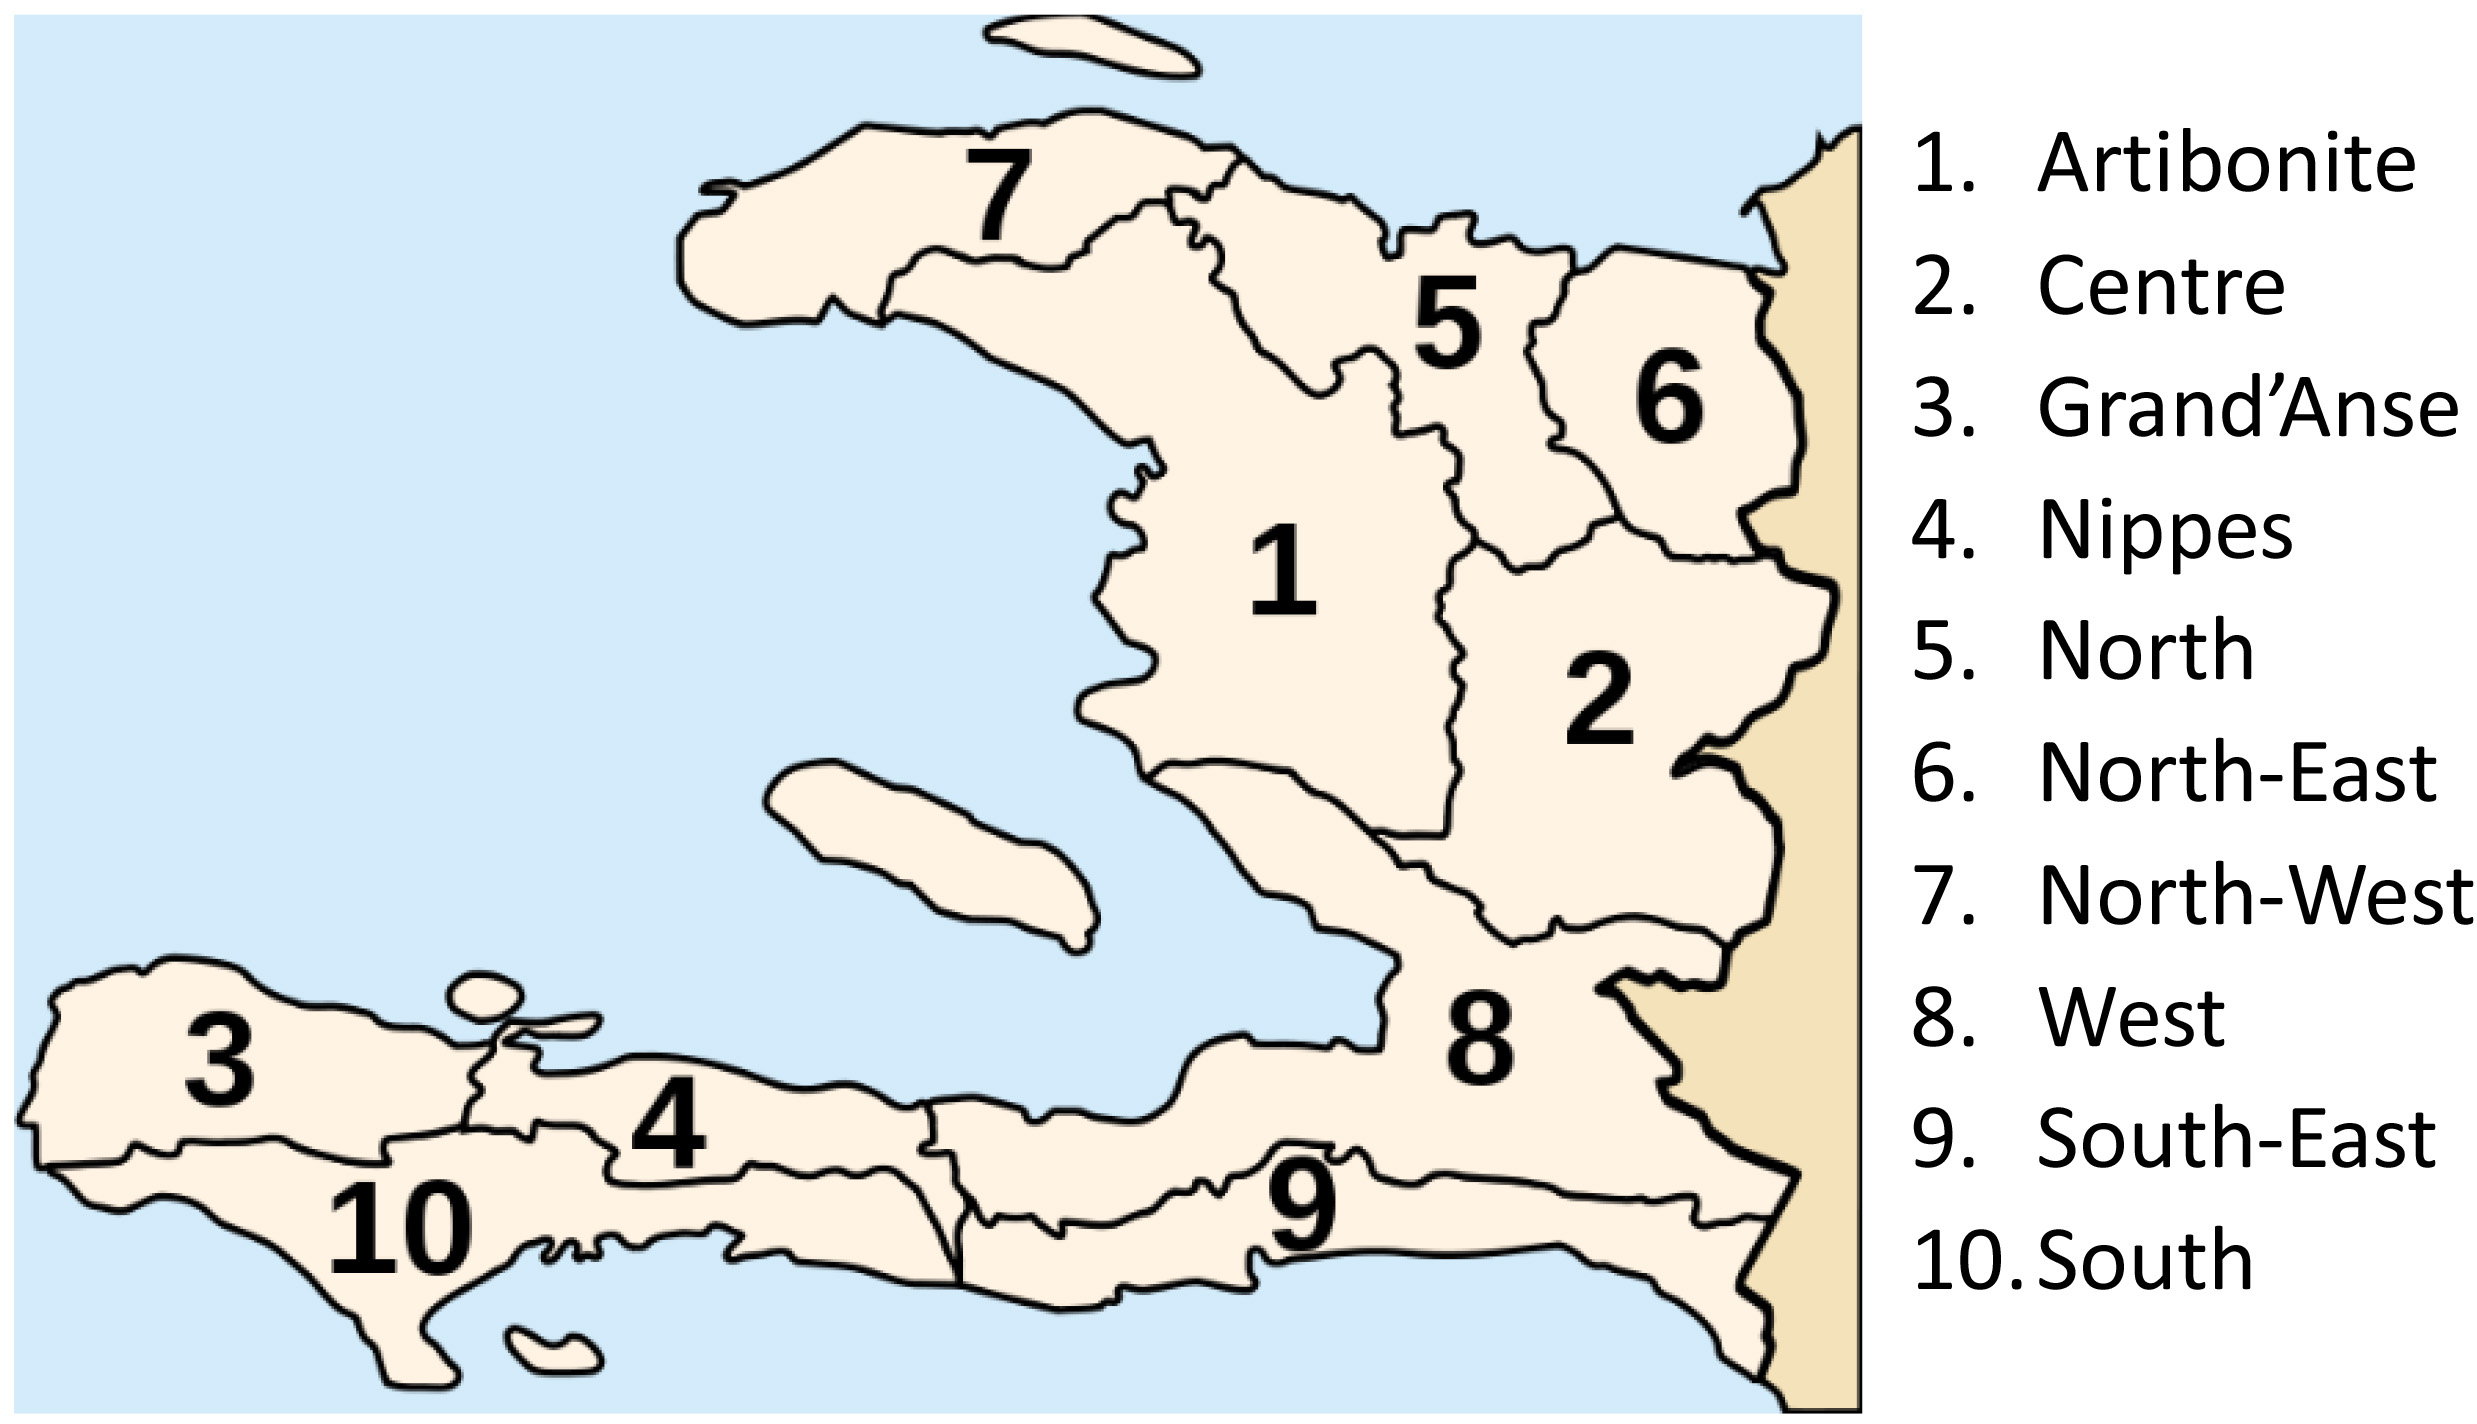 Departments of Haiti.